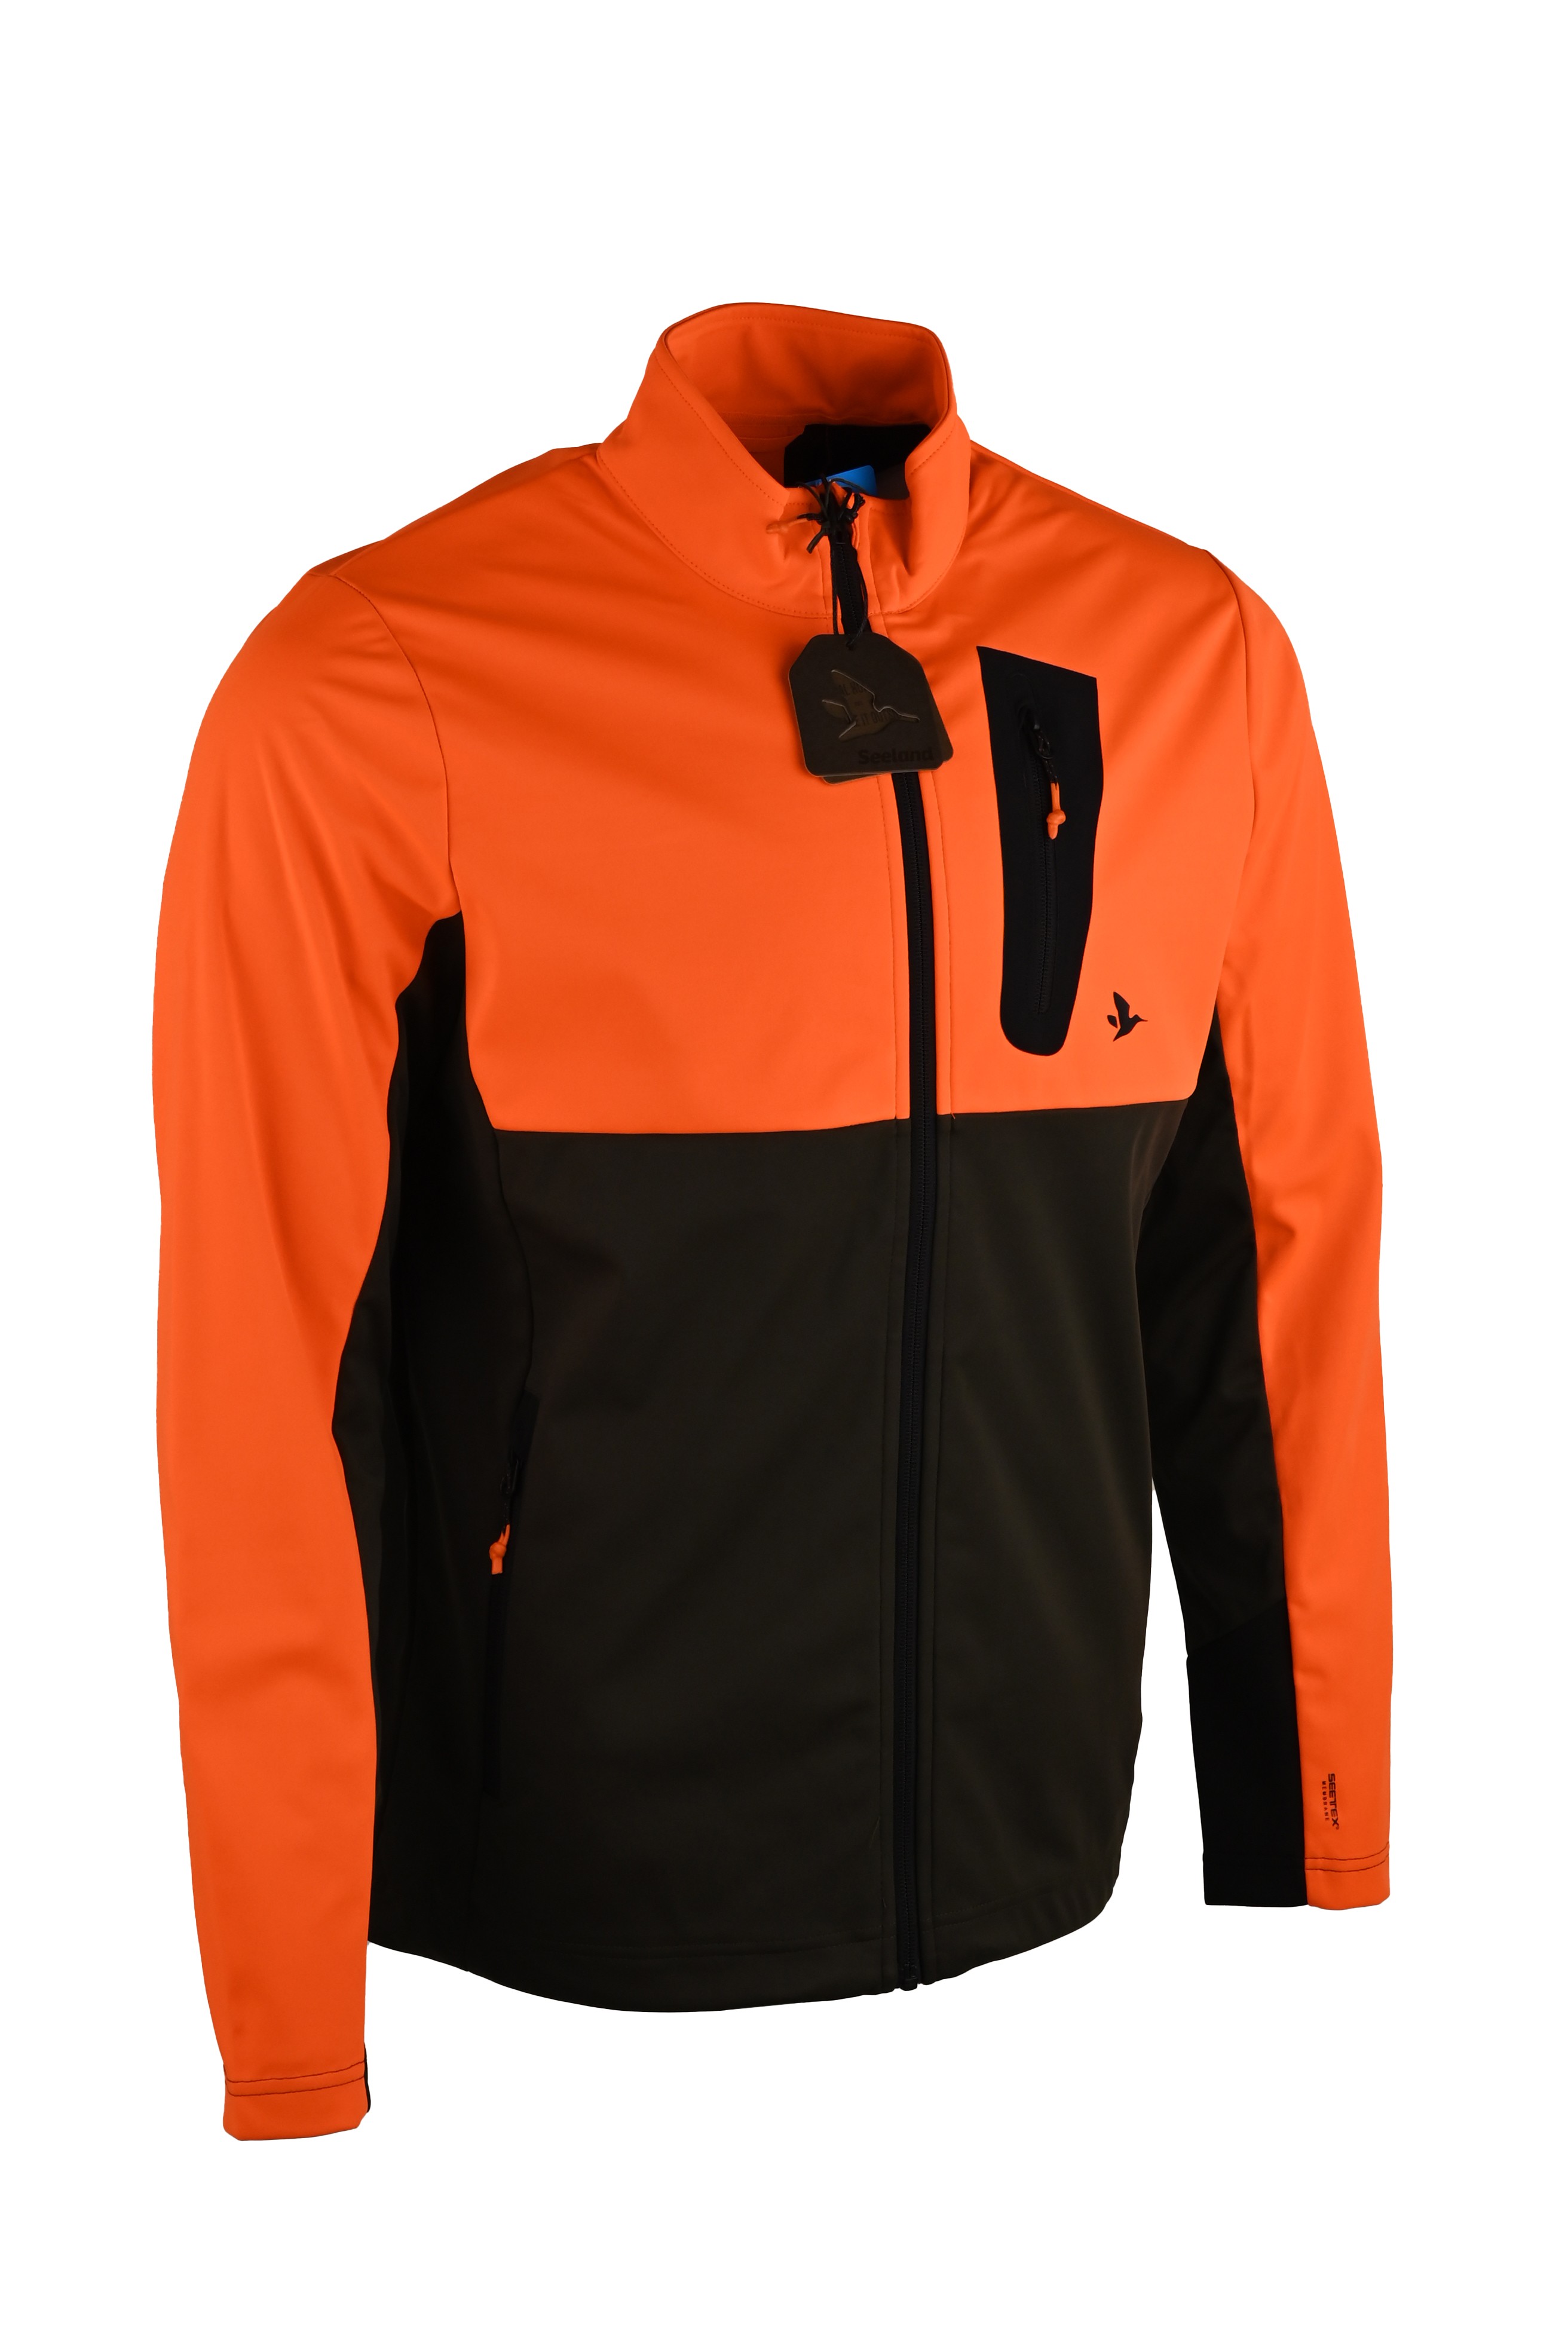 Куртка Seeland Force advanced softshell hi-vis orange ( р.M) - фото 1